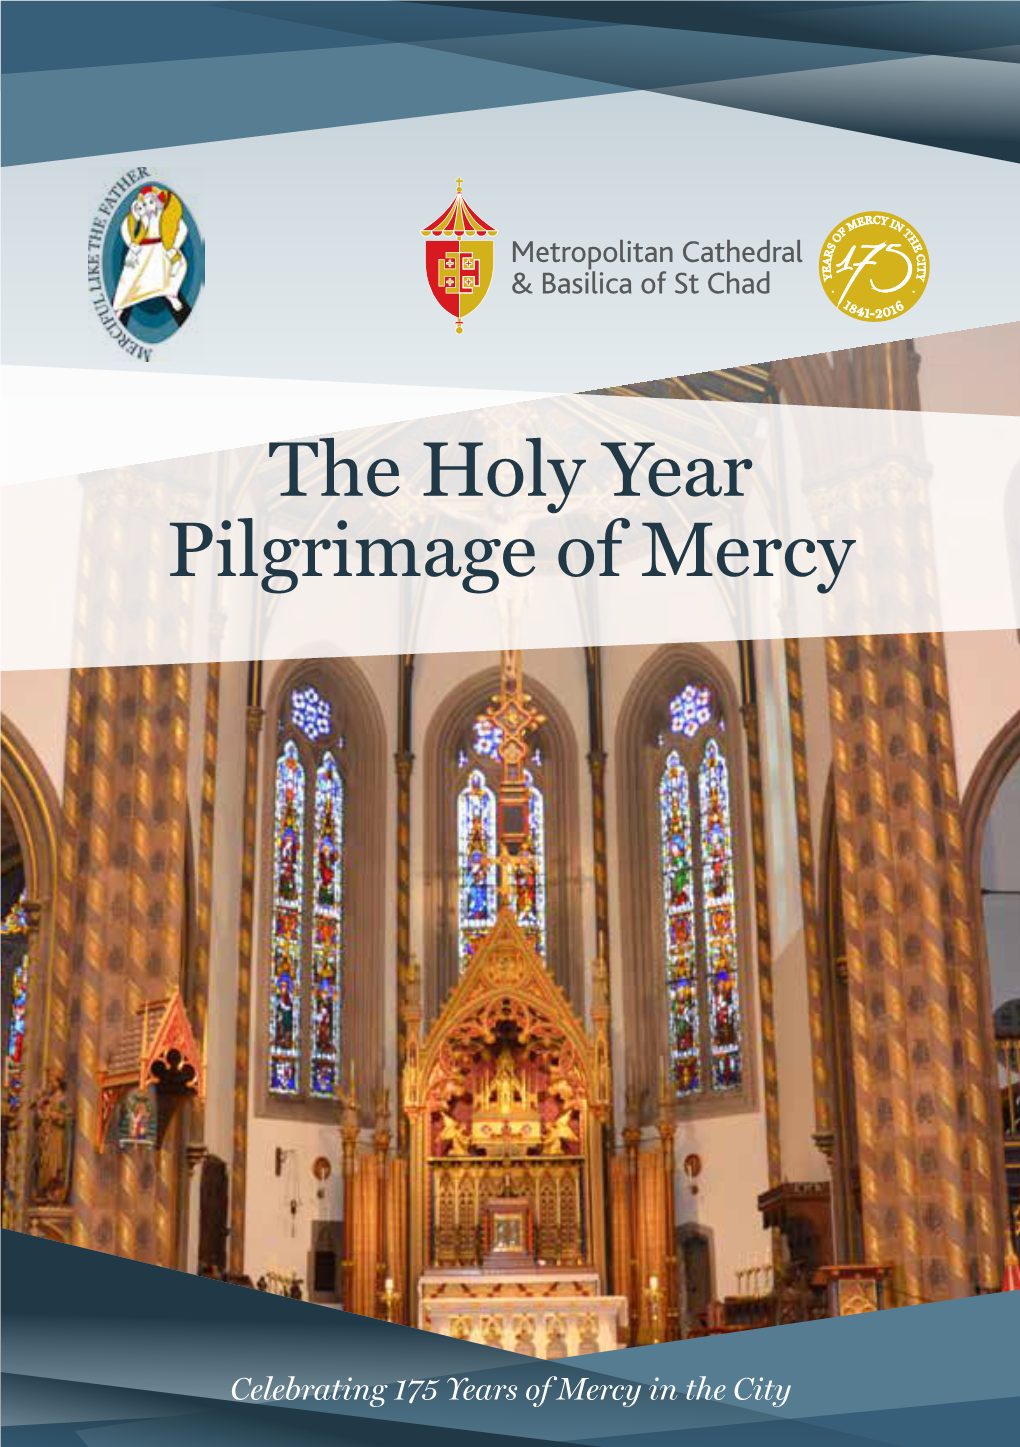 The Holy Year Pilgrimage of Mercy